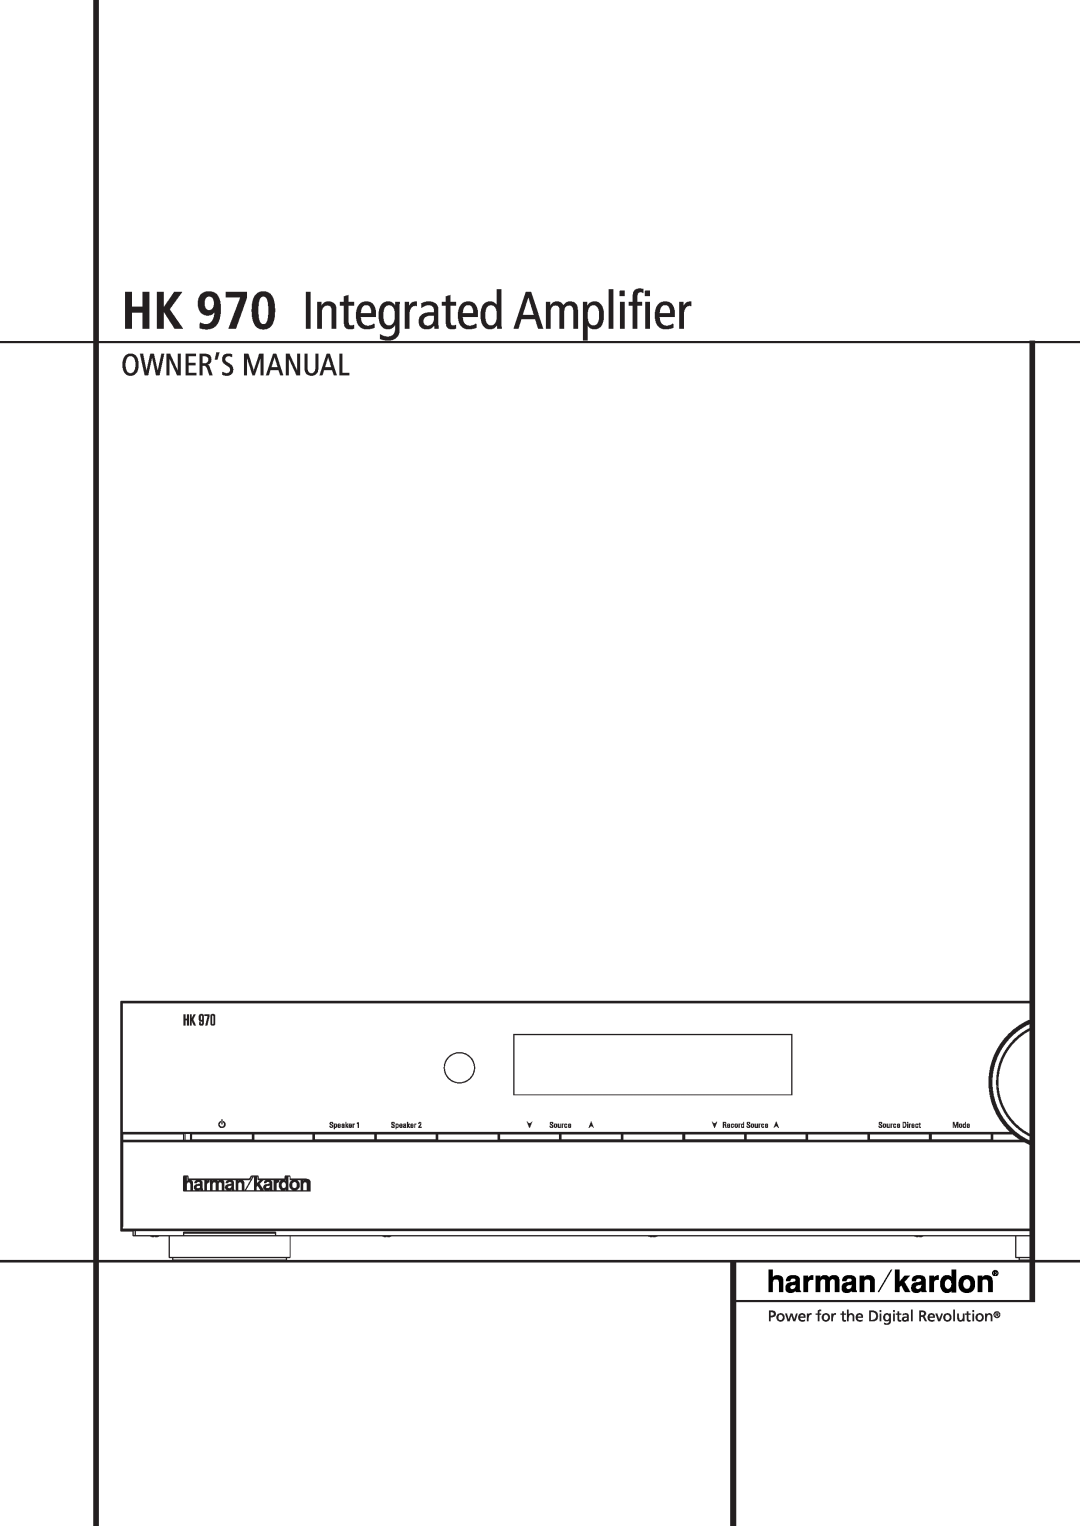 Harman-Kardon owner manual HK 970 Integrated Amplifier 